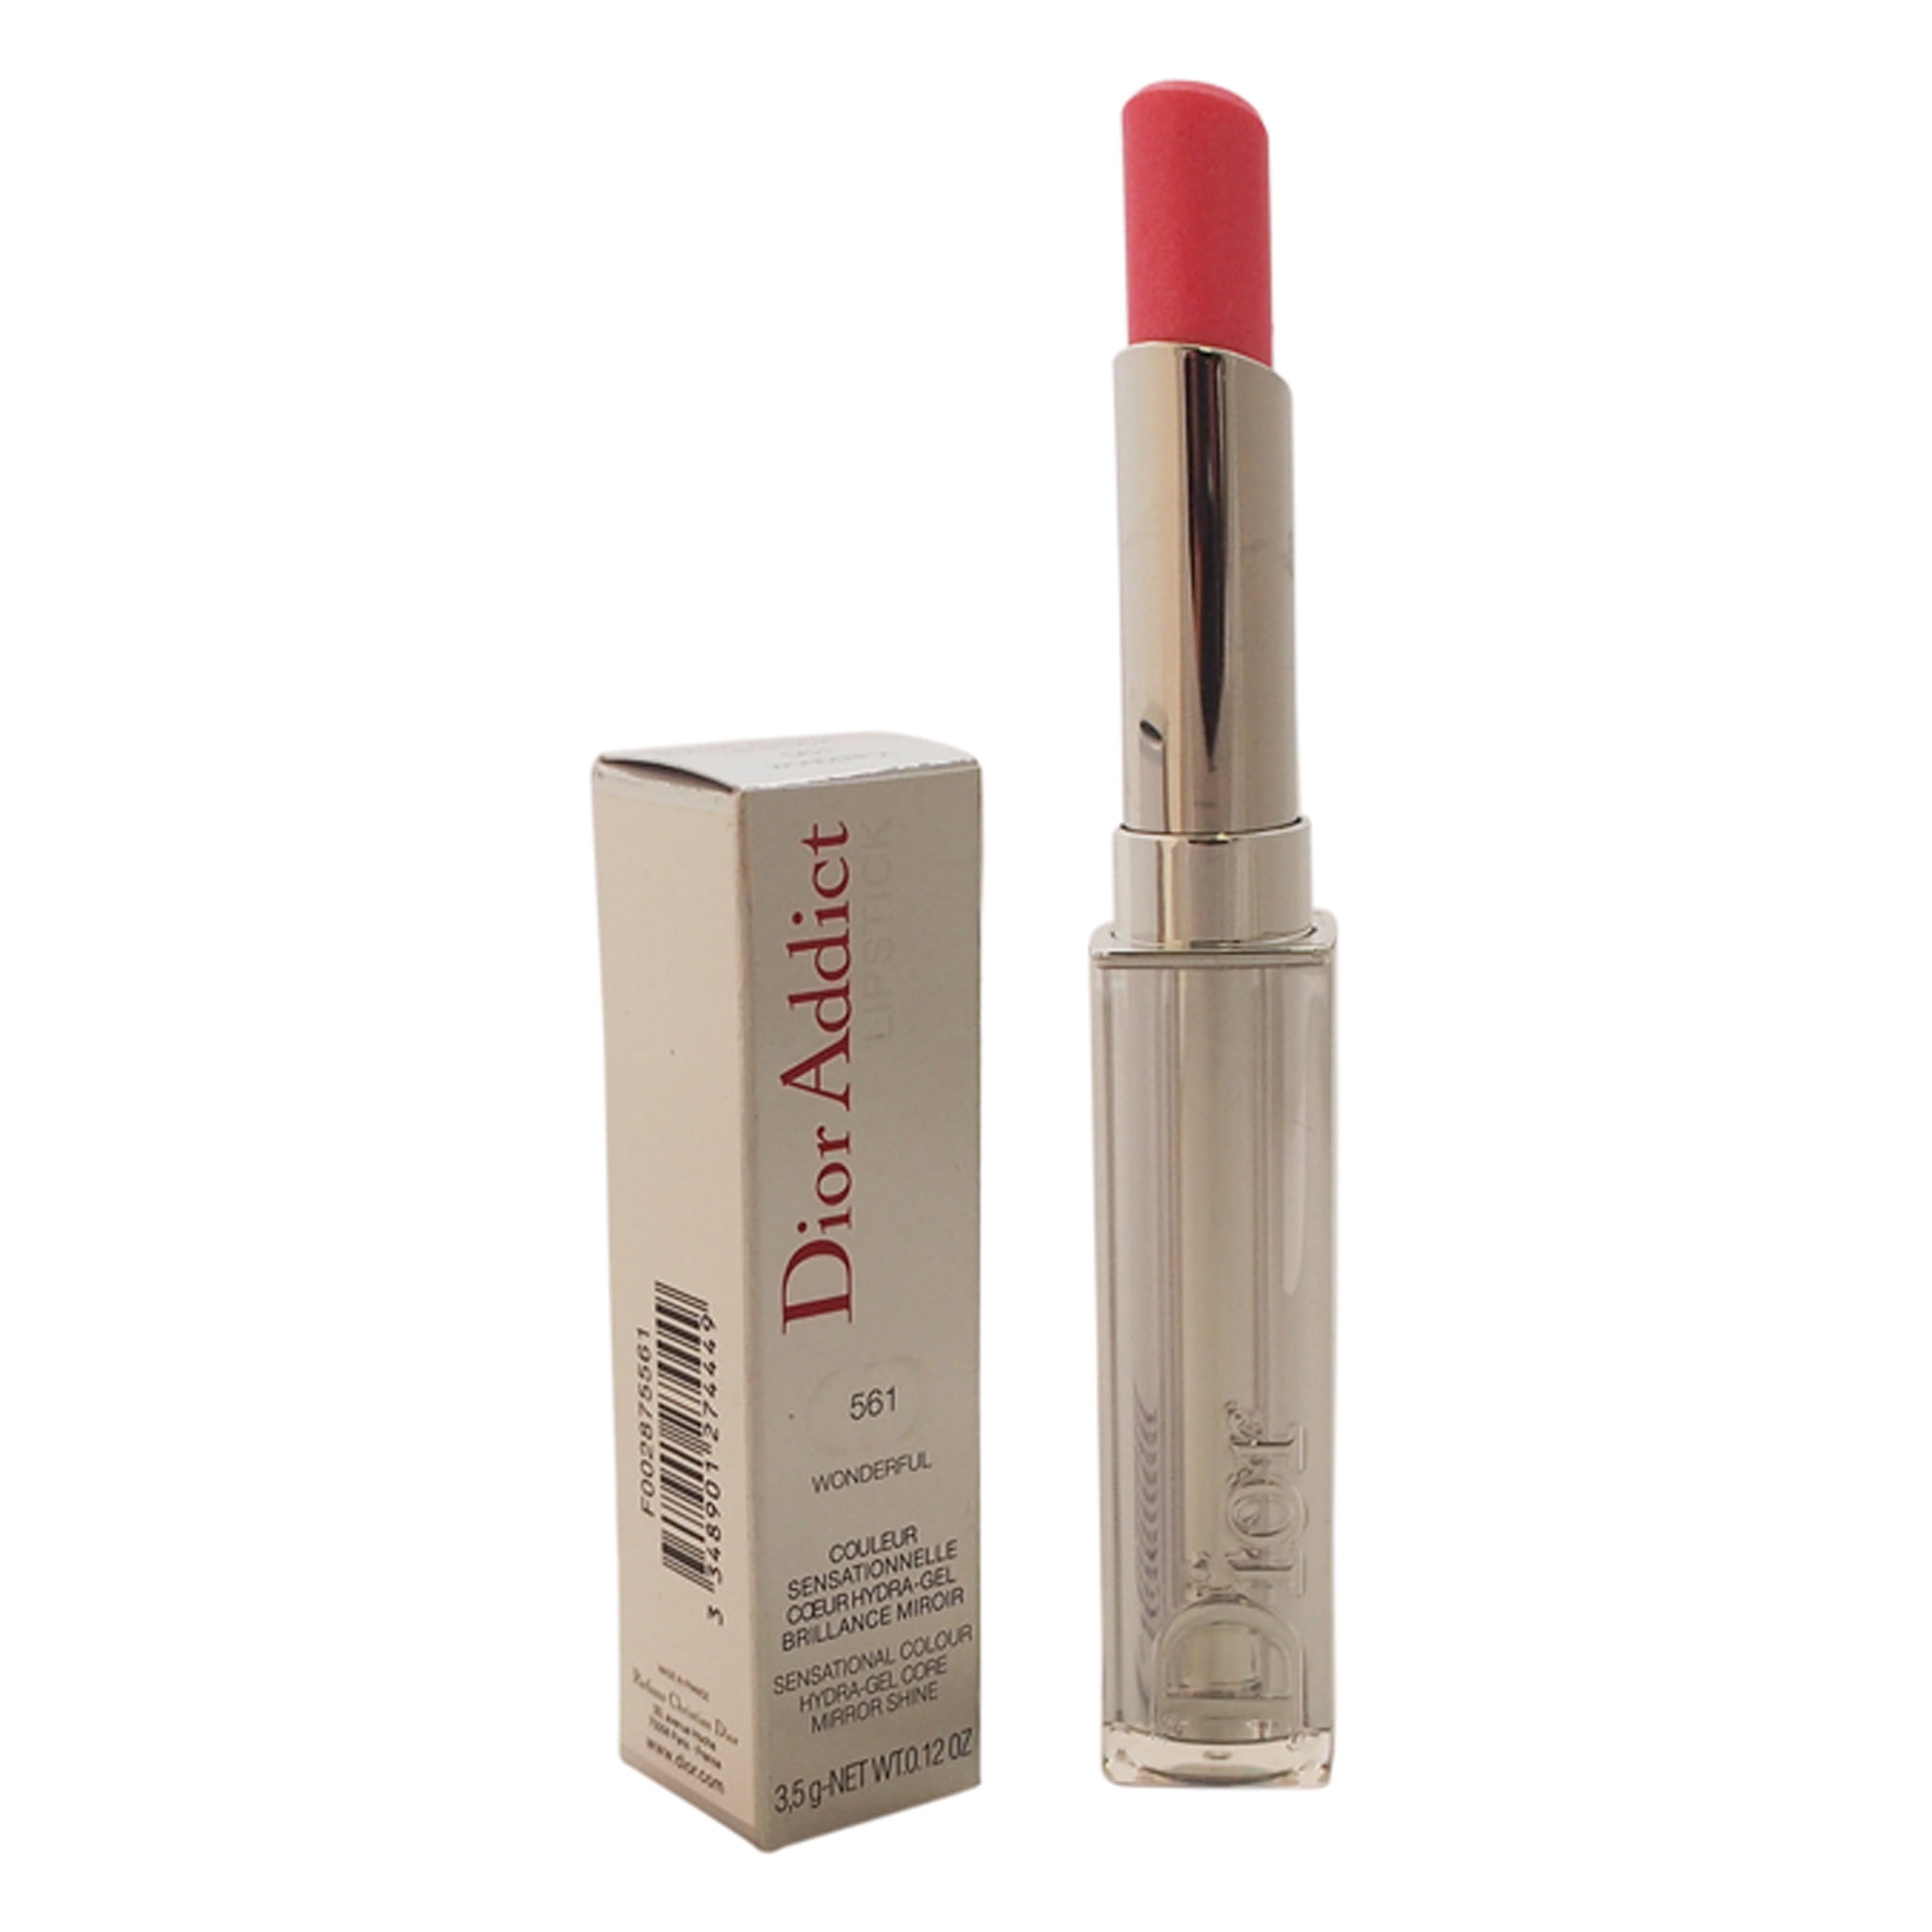 Dior Addict Lipstick - # 561 Wonderful 